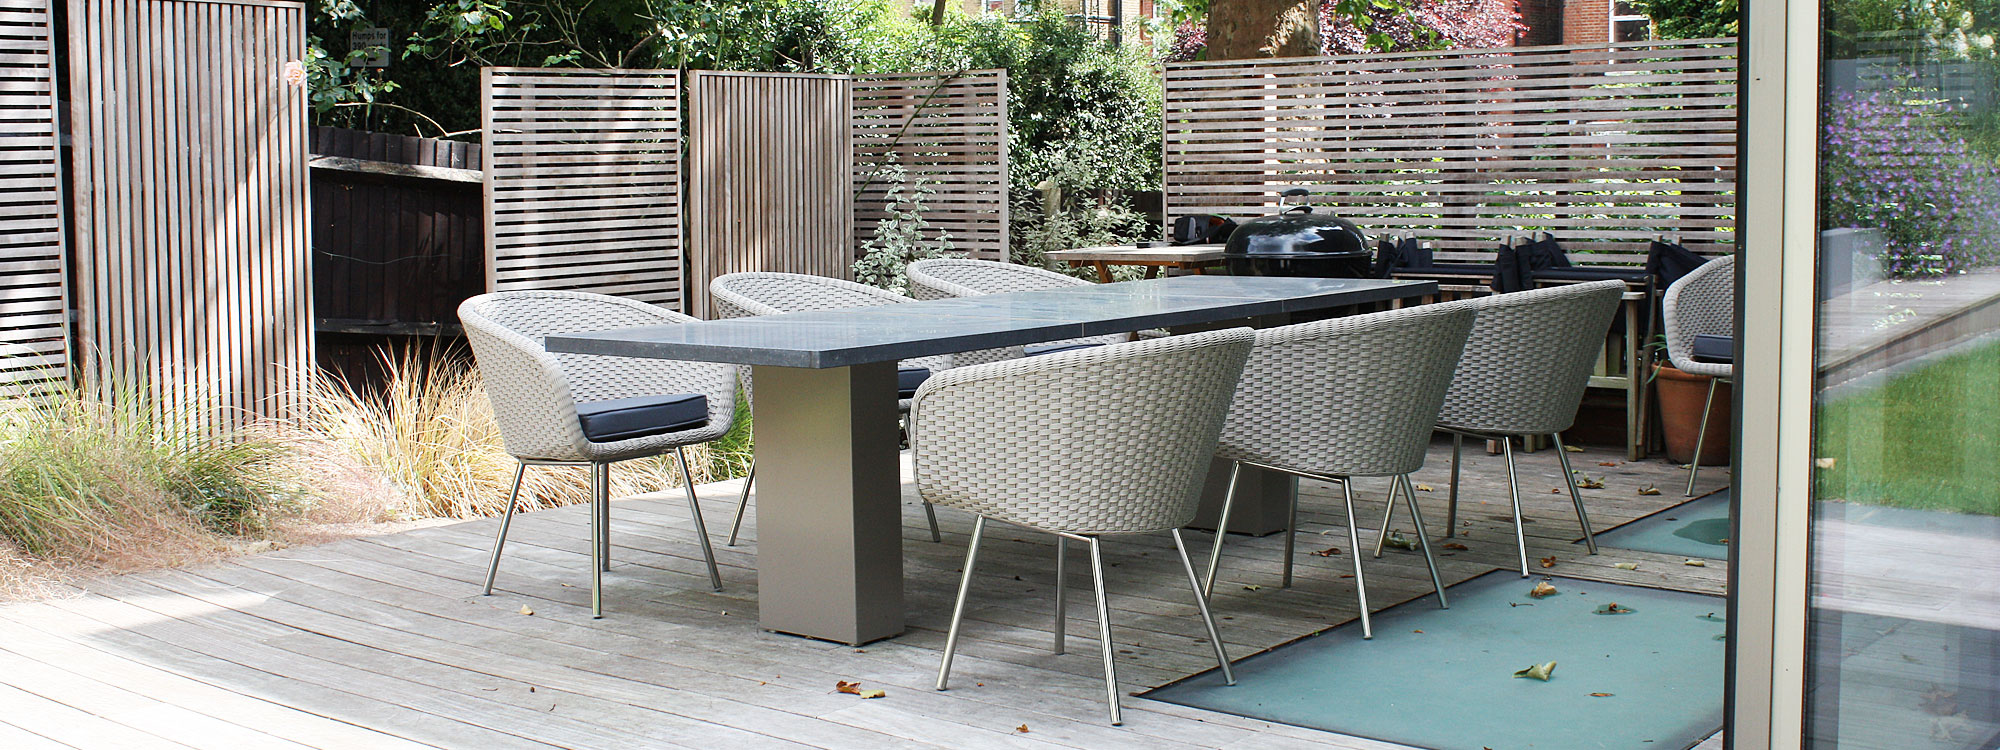 photo showing Modern Garden Furniture London Project Of FUERADENTRO Minimalist Garden Furniture. High End Outdoor Dining Furniture In Premium Garden Furniture Materials.